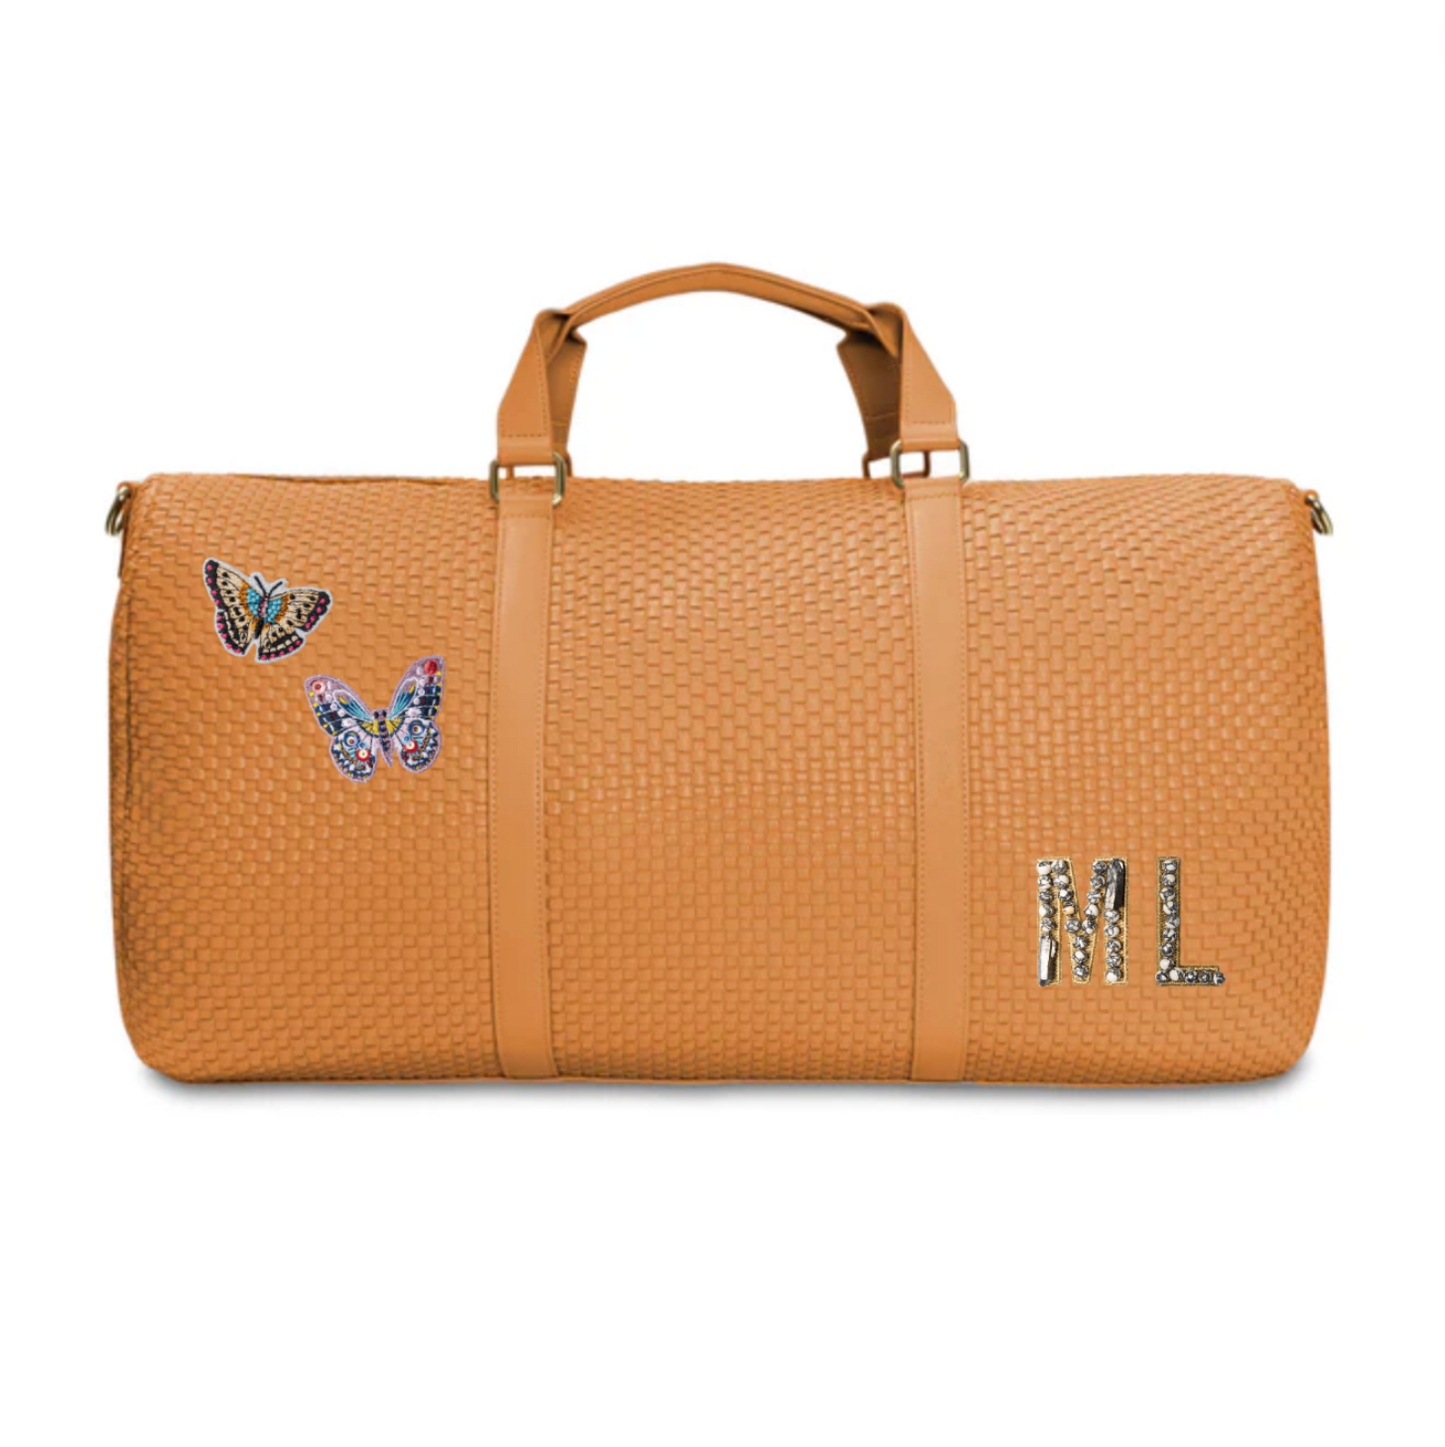 Butterflies & 2 Letters Duffle Bag (Customizable)